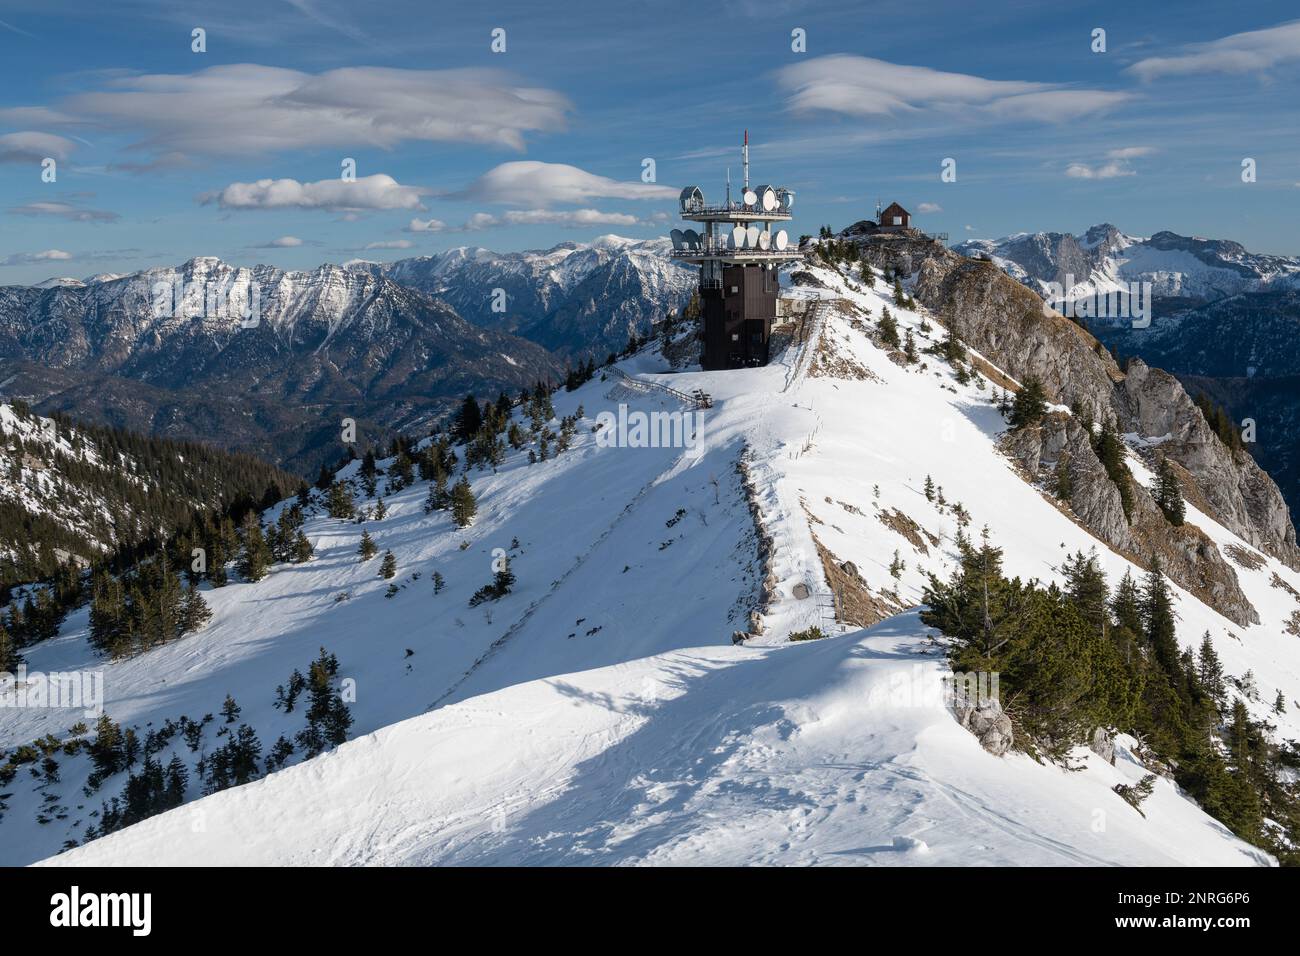 The Alps by Hochkar in the winter, Austria Stock Photo